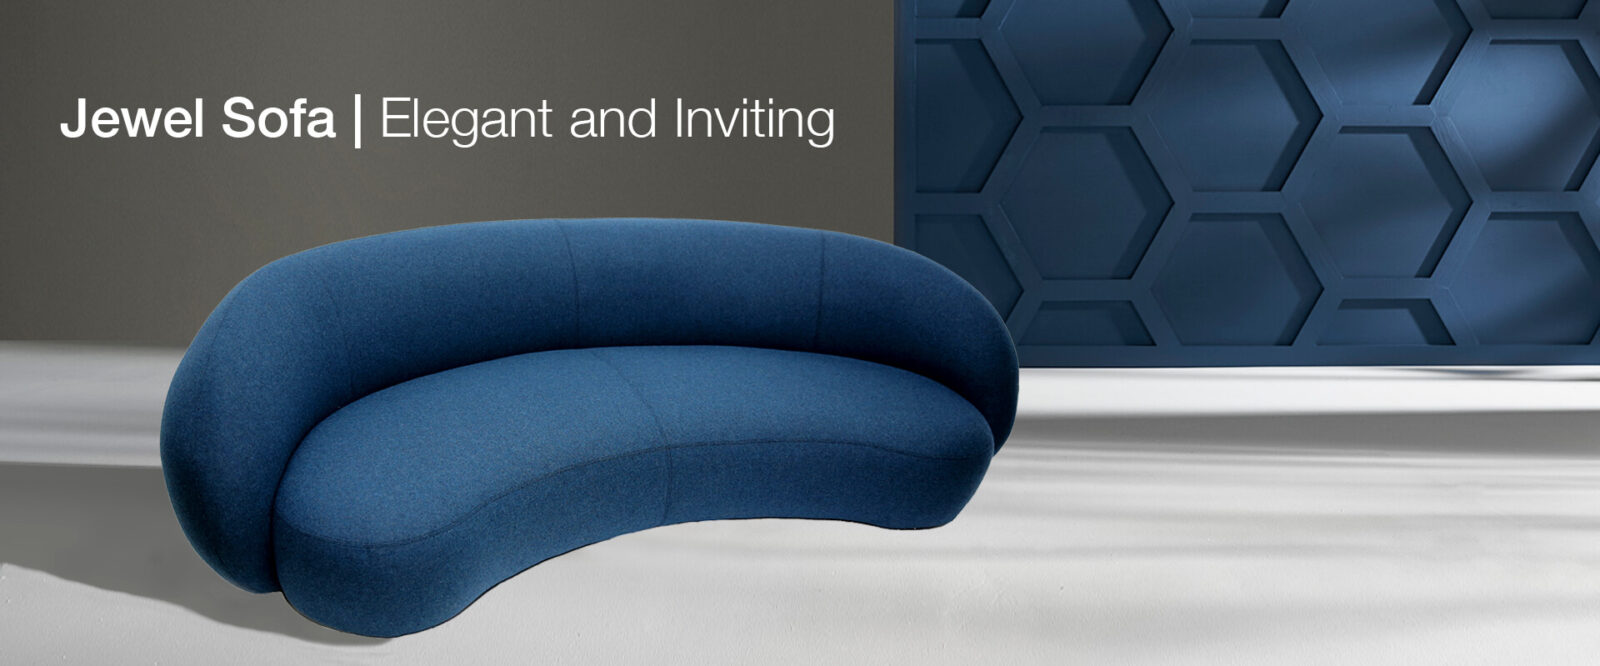 new furniture design of sofa by beaufurn